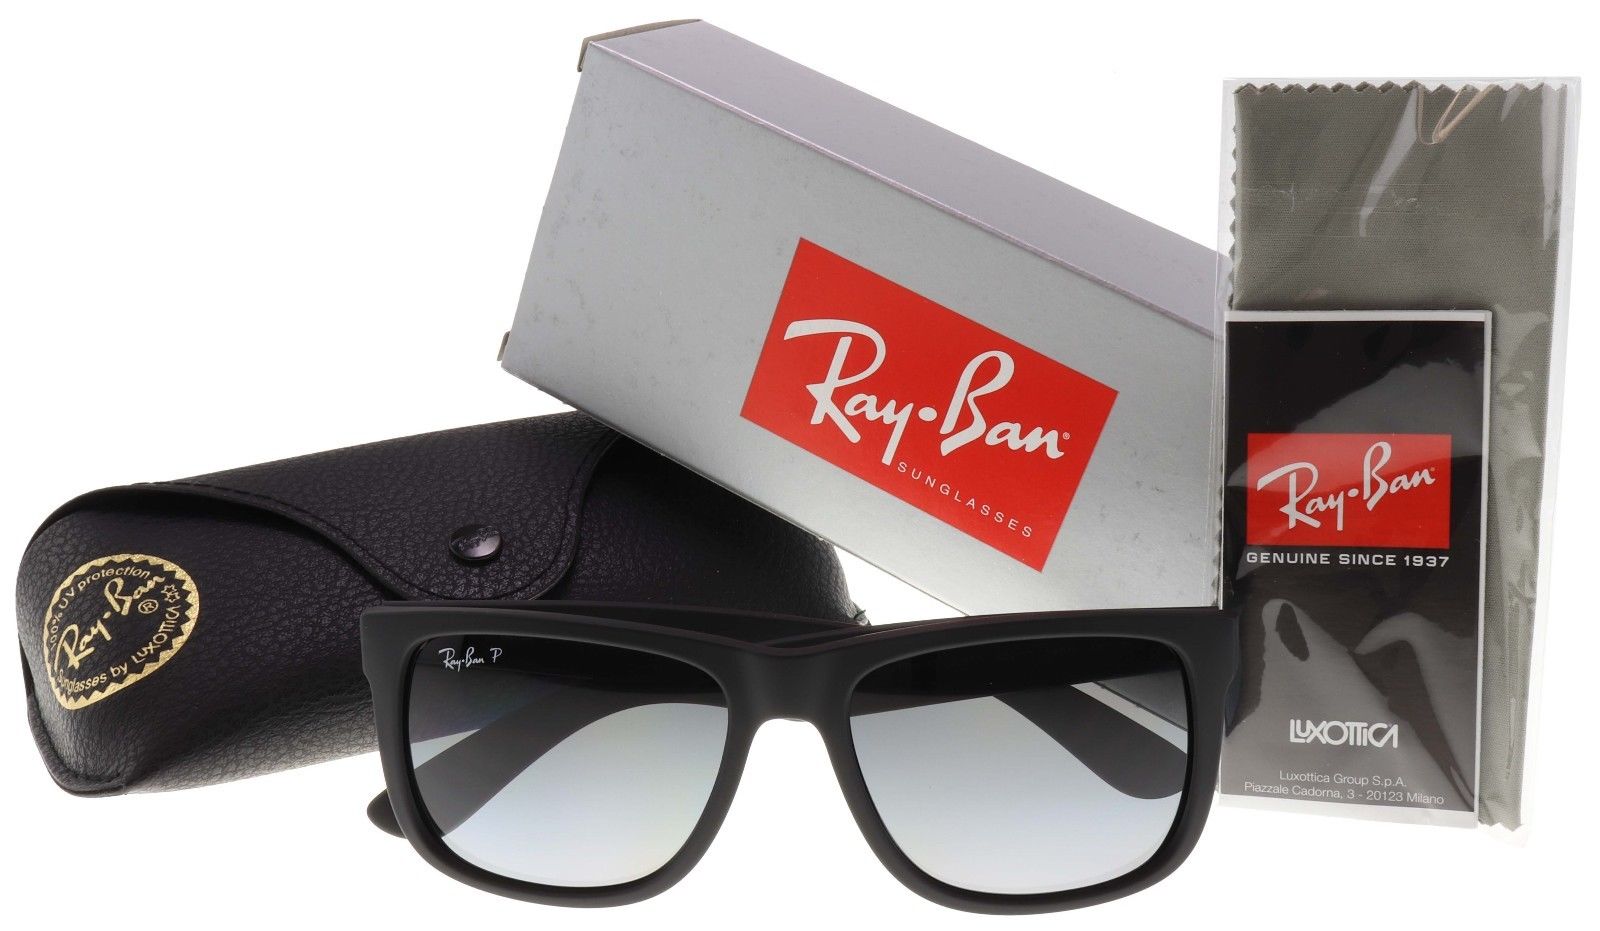 Официальные очки ray ban. Ray-ban rb4235 601s. Ray ban коробка. Очки Рей Бен 35920. Стойка ray ban.